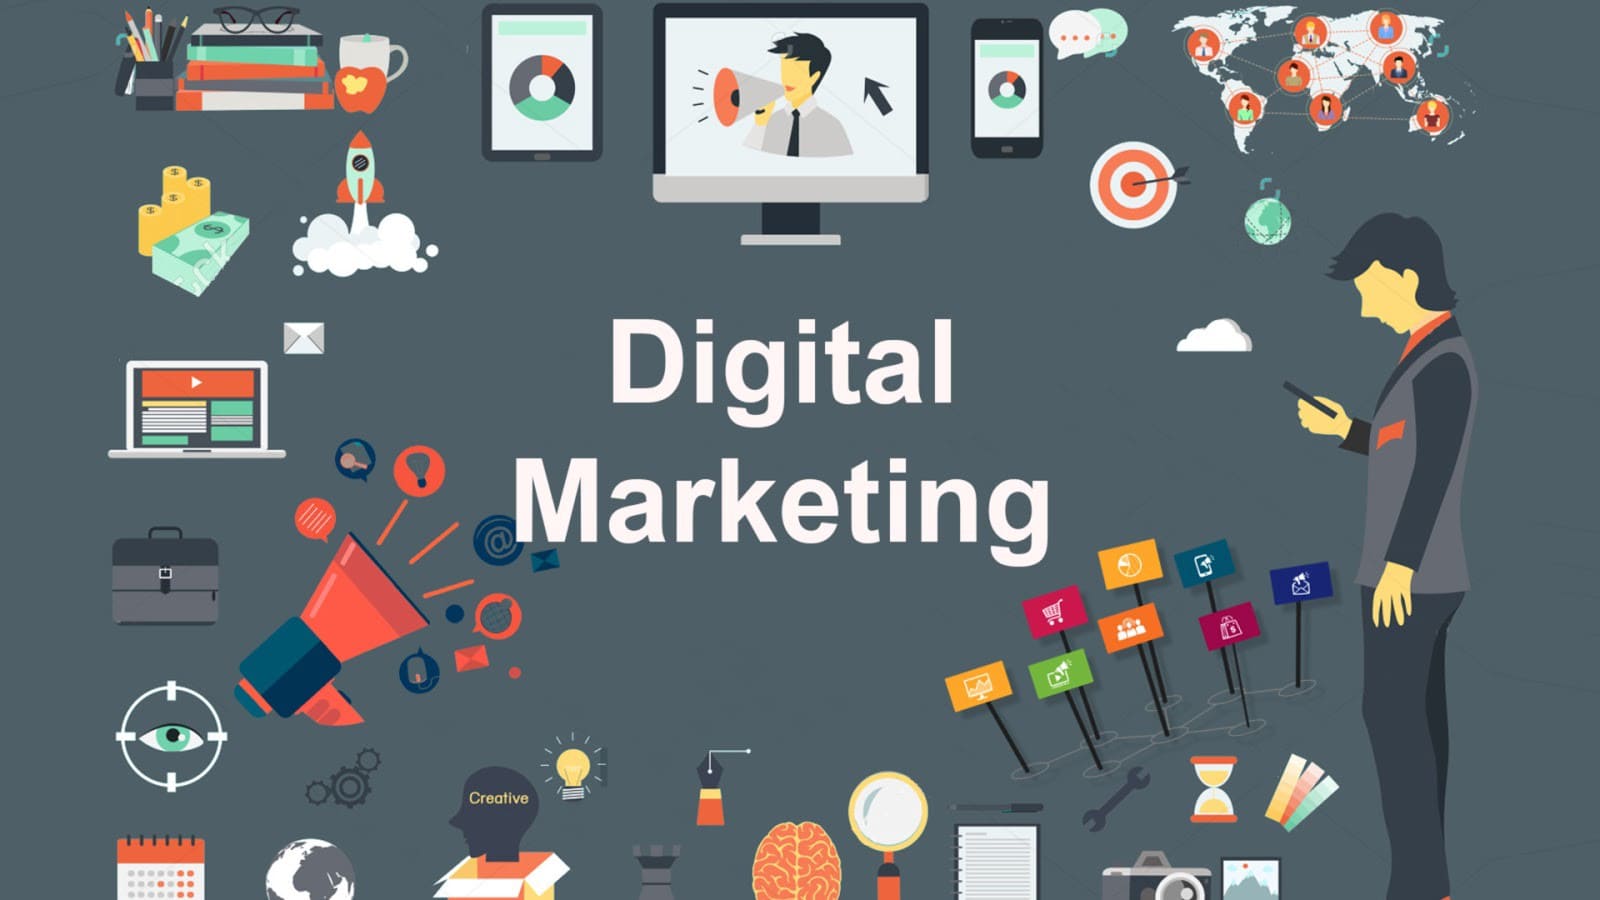 online digital marketing